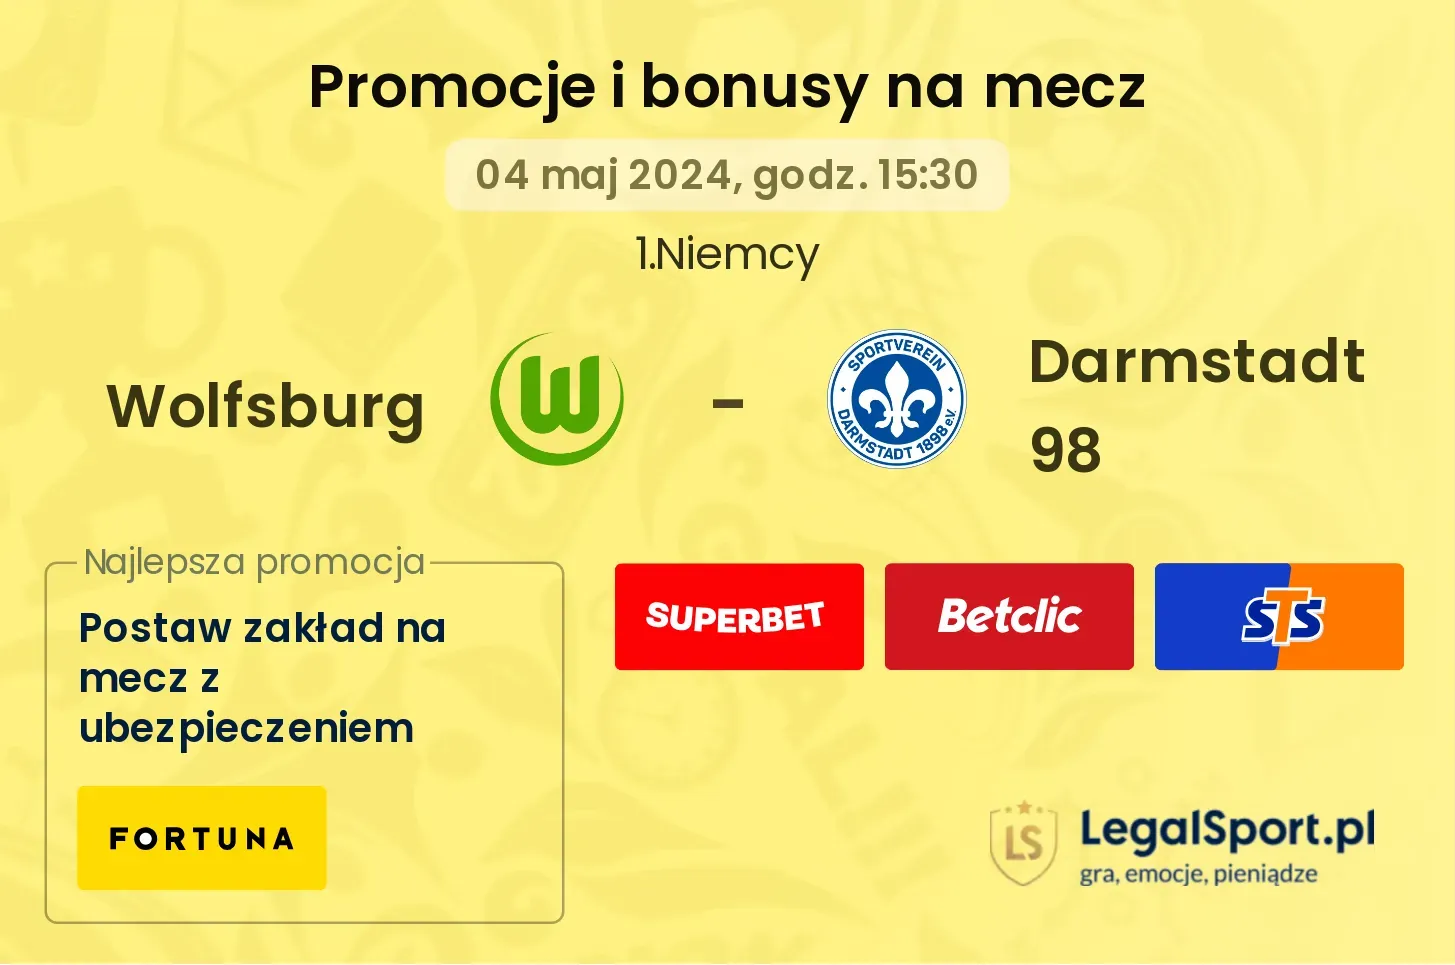 Wolfsburg - Darmstadt 98 promocje bonusy na mecz